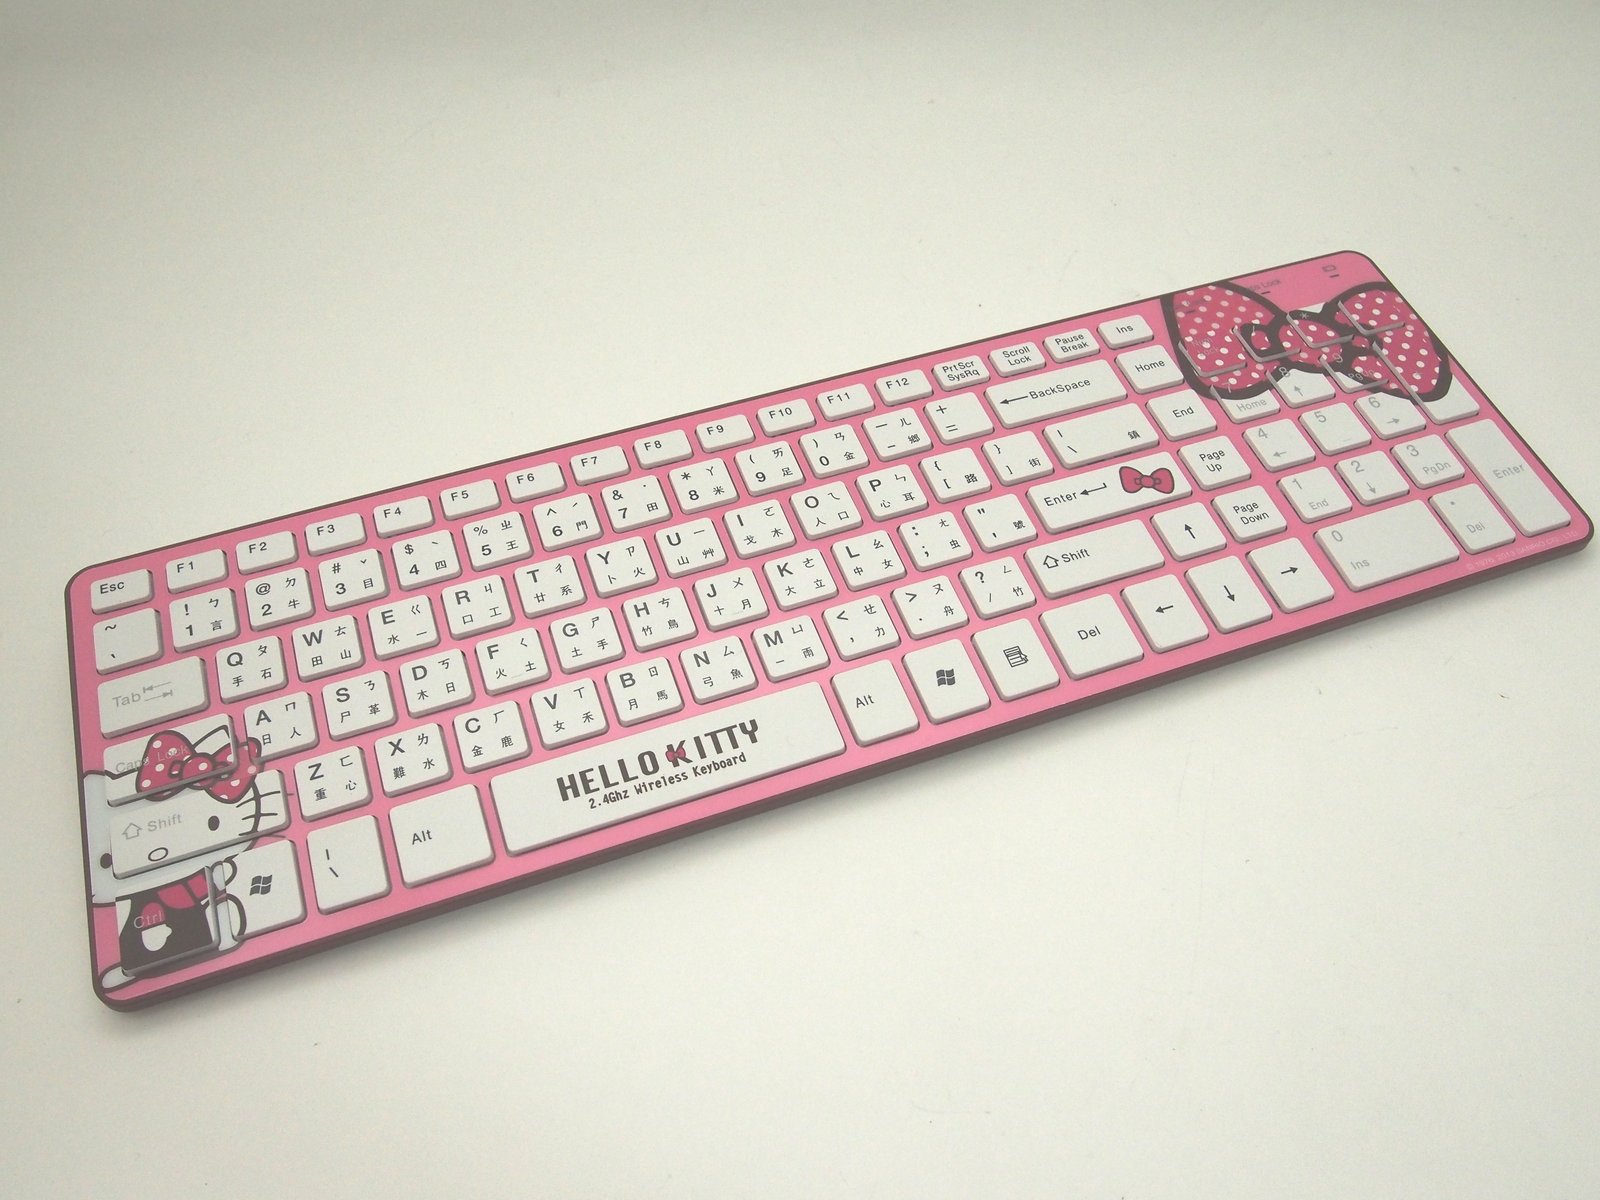 [XF] 喚起內心無限的可愛少女心 B.FRiEND Hello Kitty 無線鍵盤滑鼠組